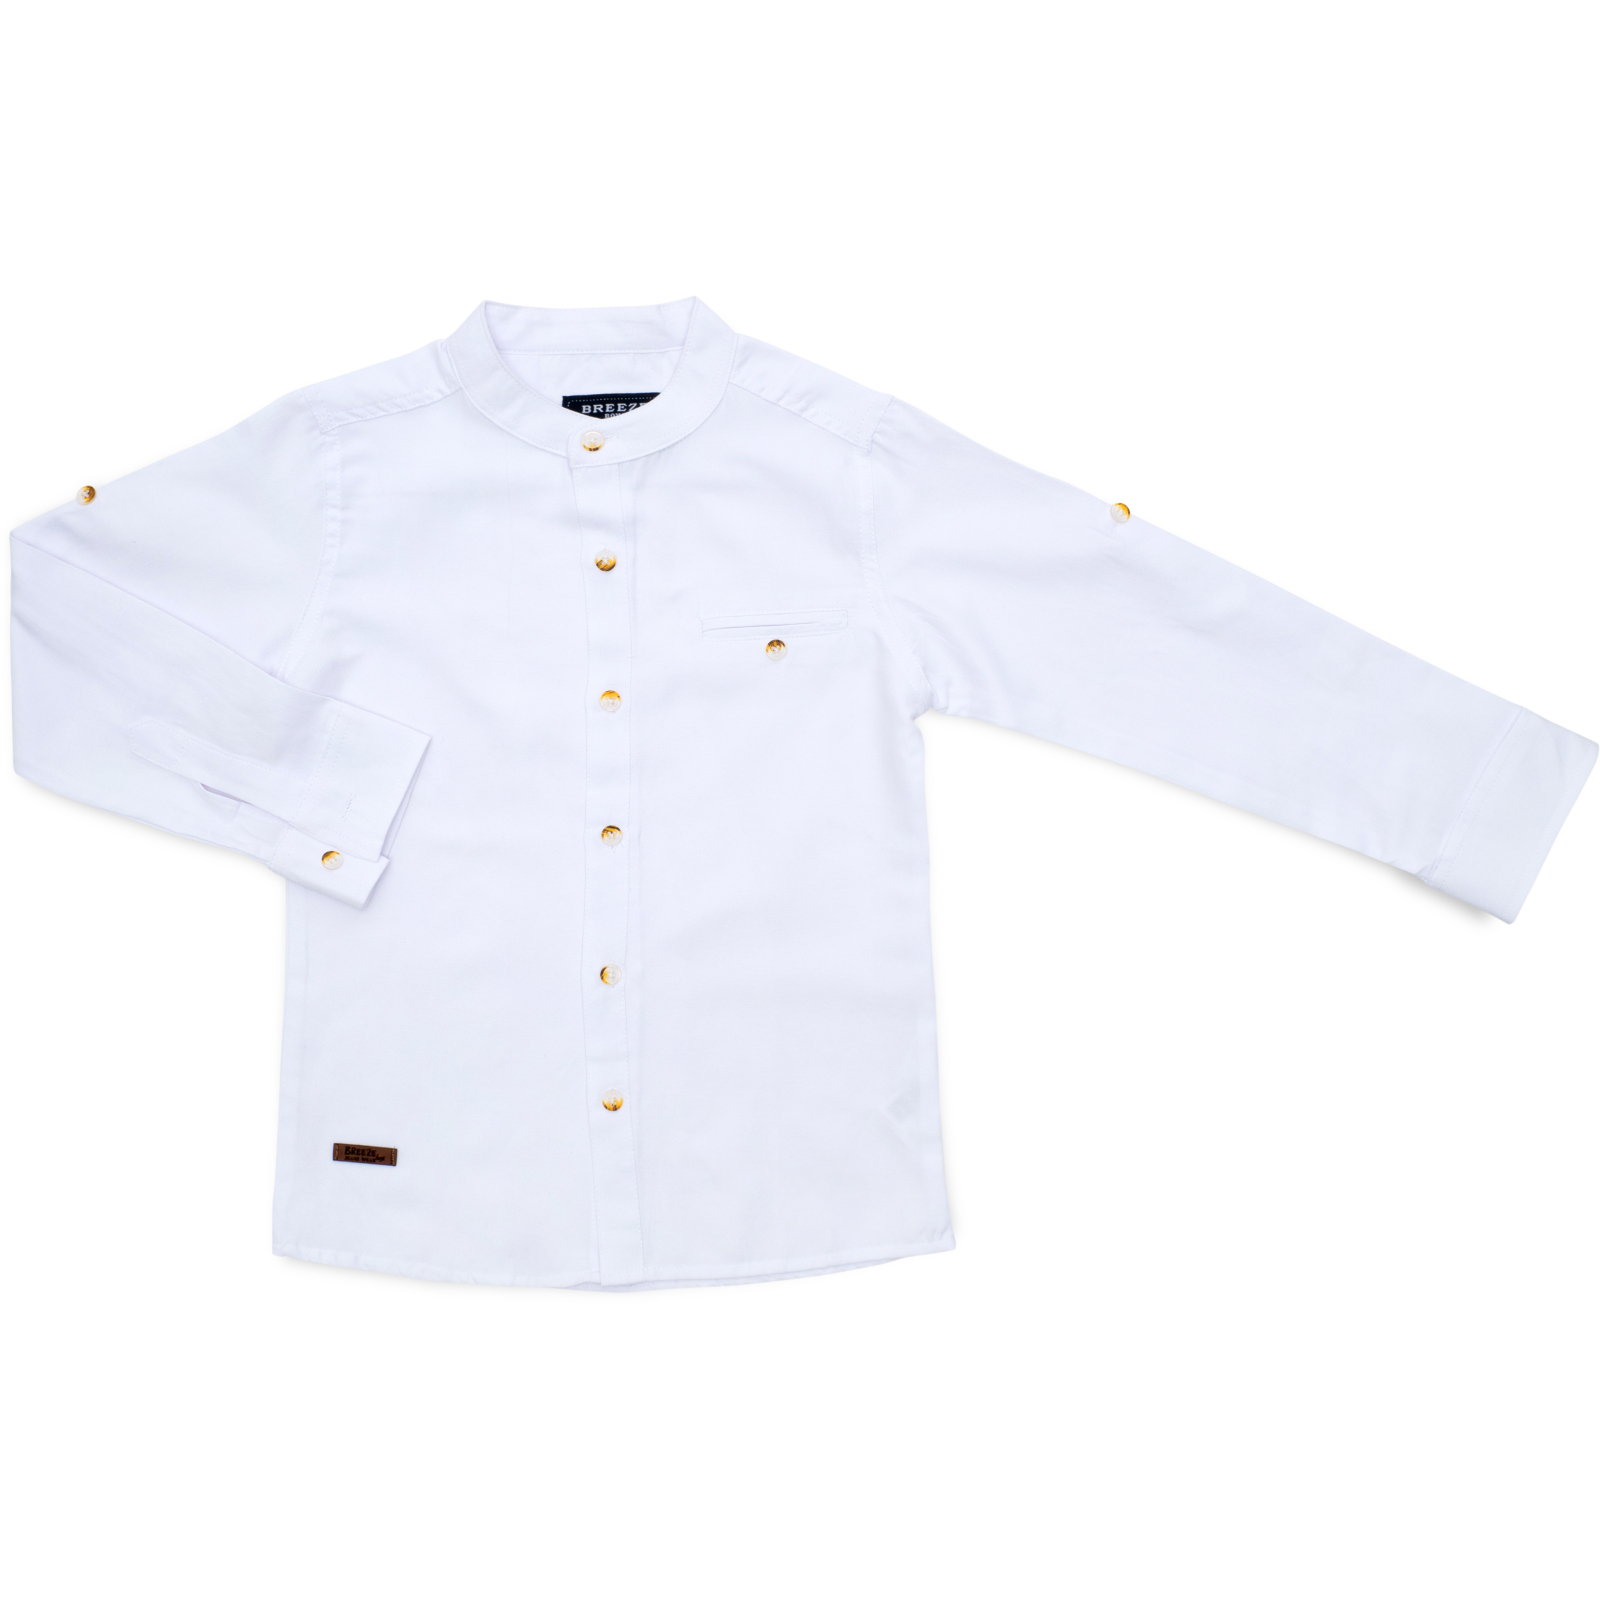 Рубашка Breeze для школы (G-457-134B-white)